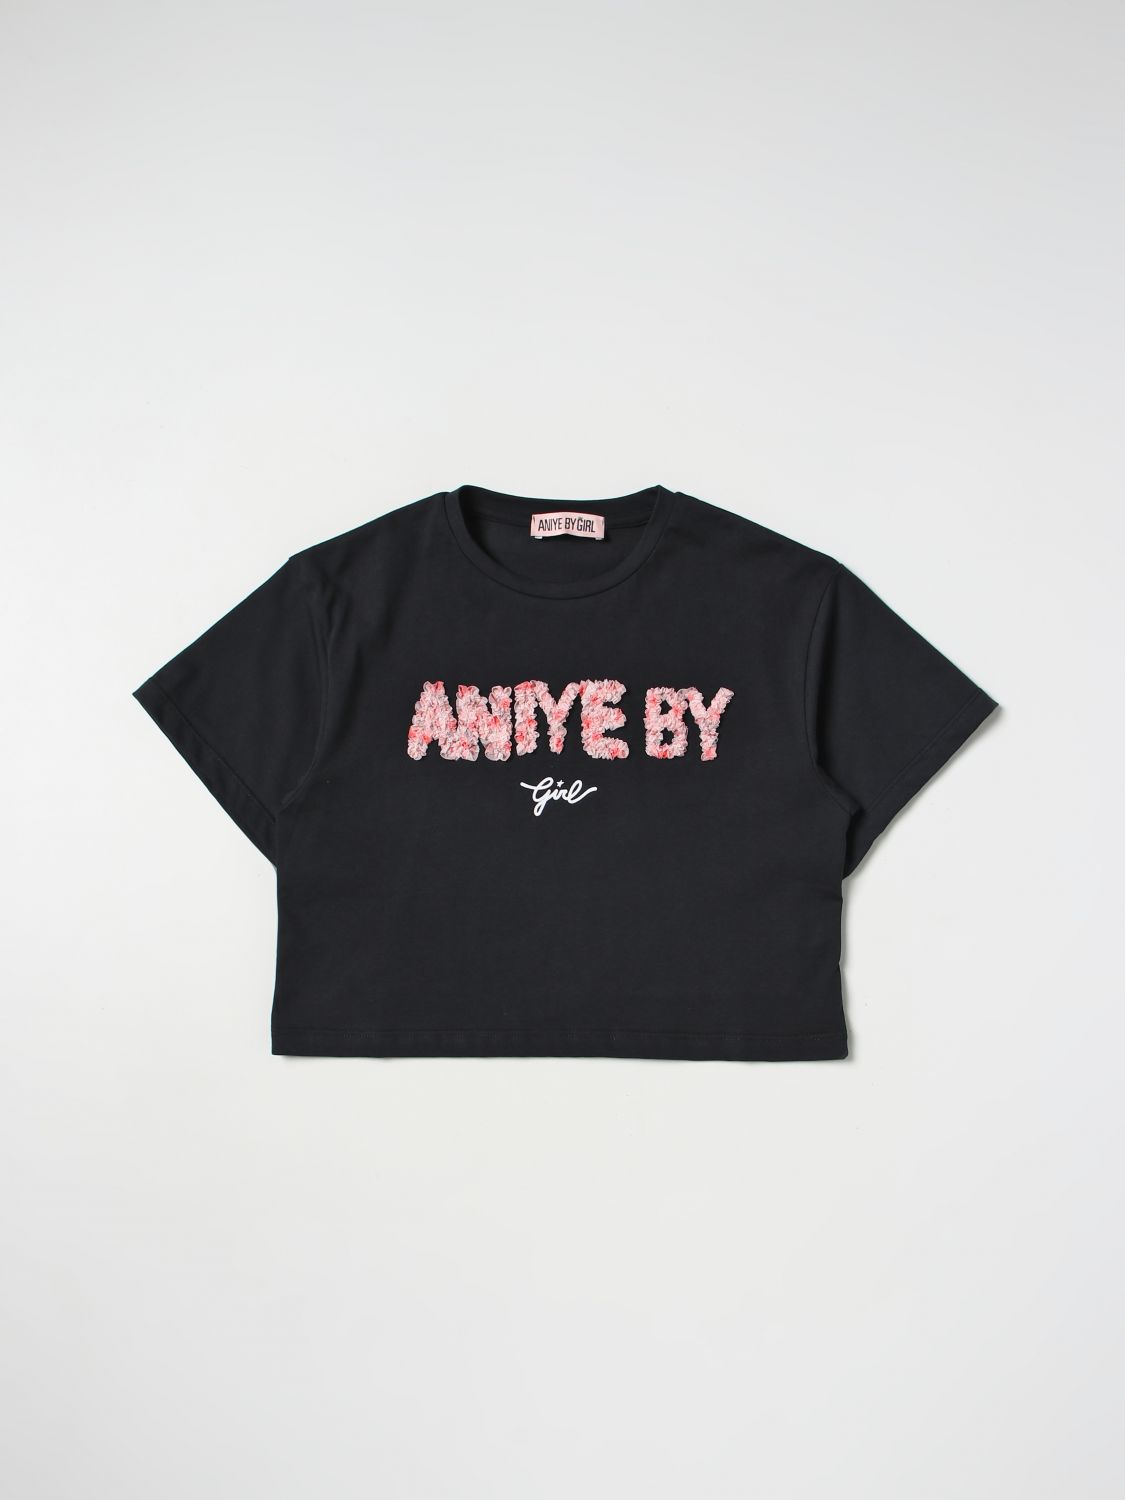 ANIYE BY: t-shirt for girls - Black | Aniye By t-shirt 033390 online on ...